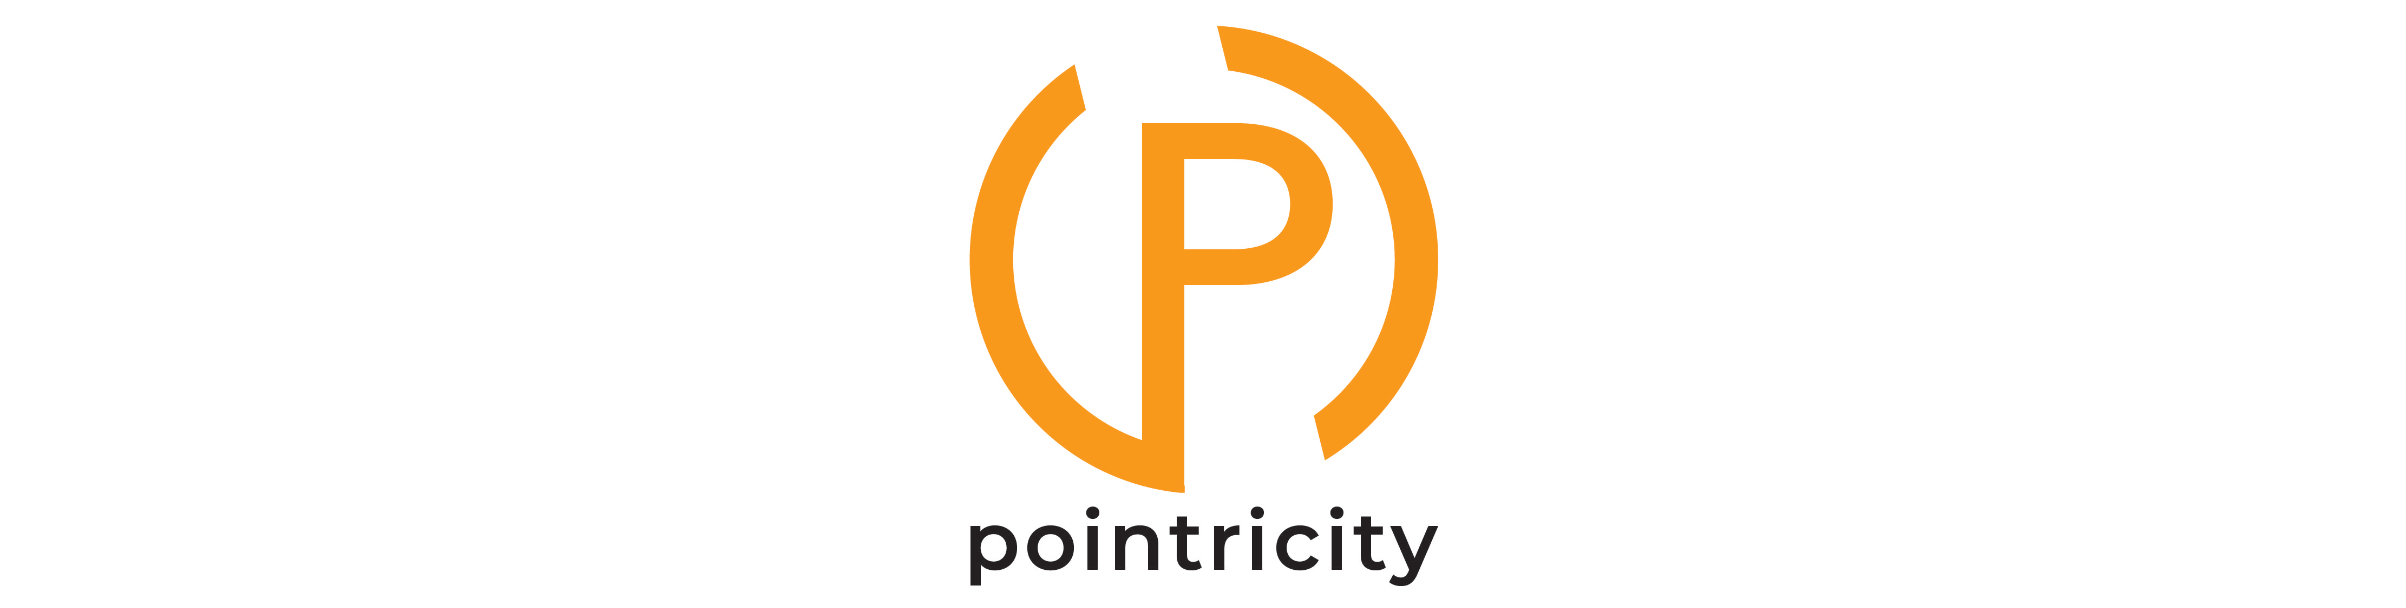 Pointricity logo